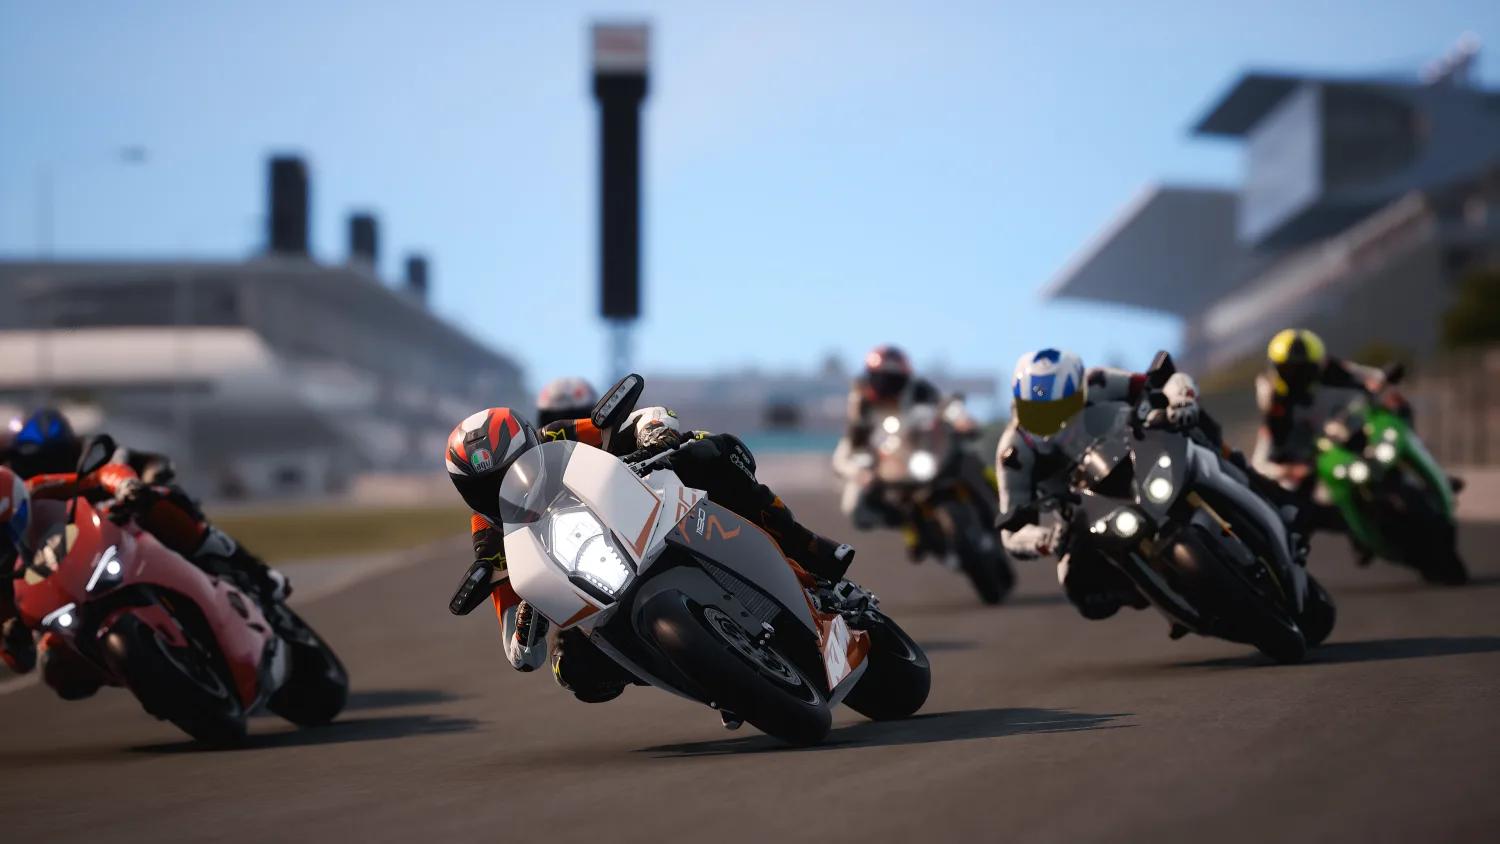 juegos de todo tipo de motos - Cuántos estilos de motos existen